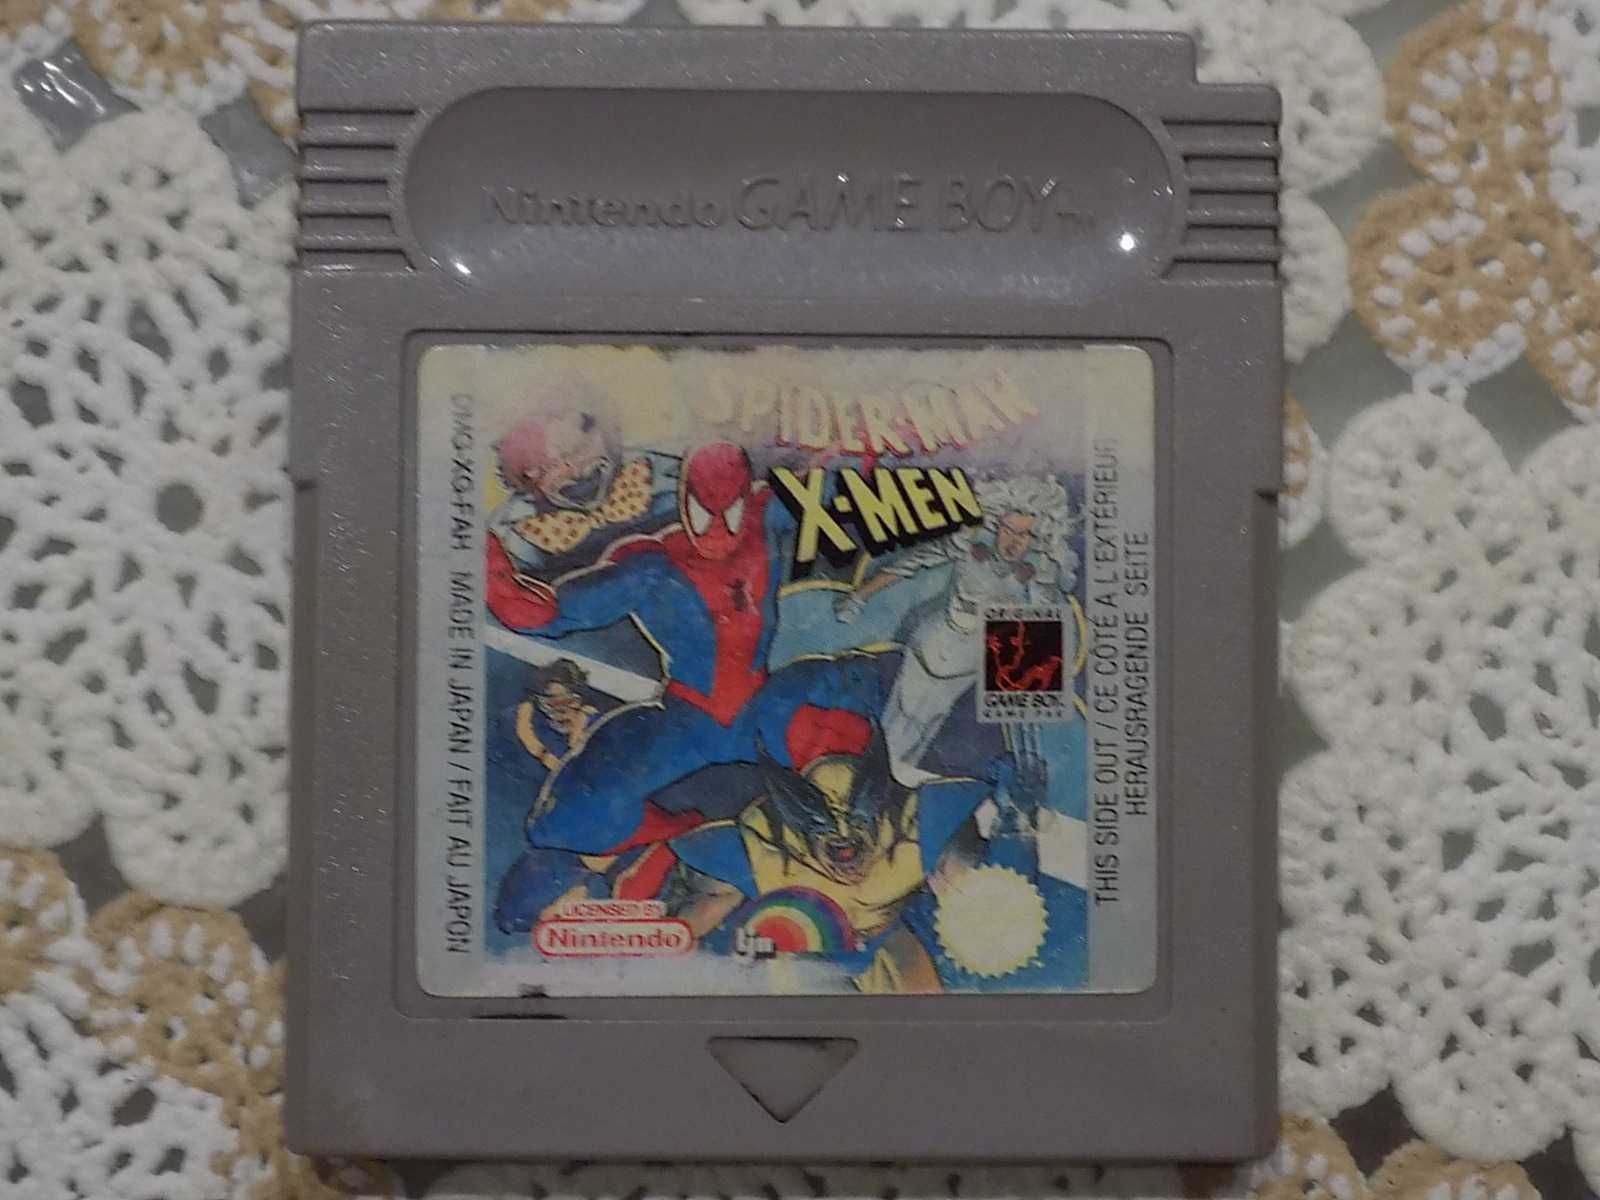 Spider-Man and X-Men in Arcade's Revenge na Nintendo Game Boy/GBC/GBA